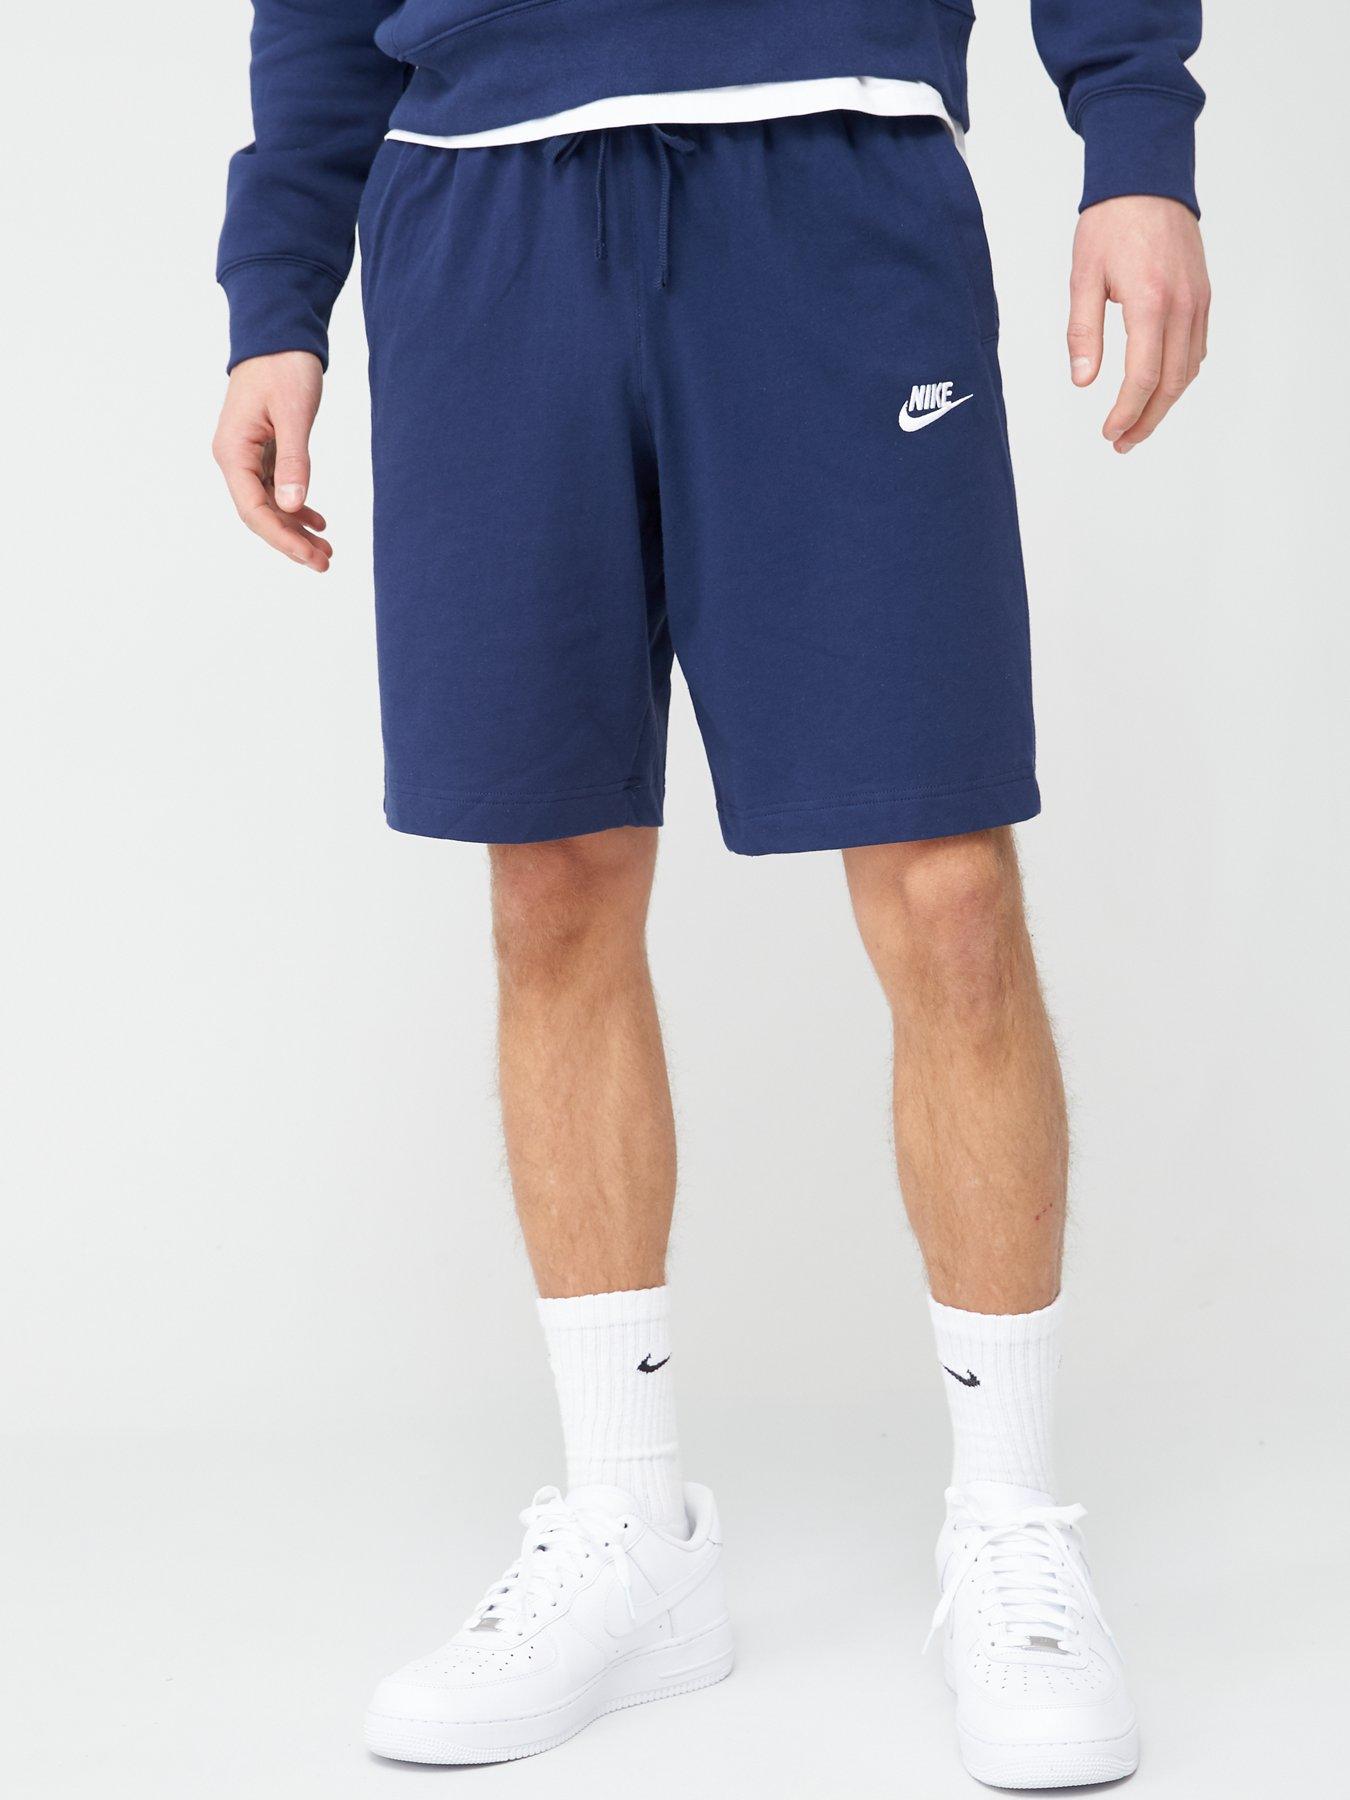 navy nike shorts